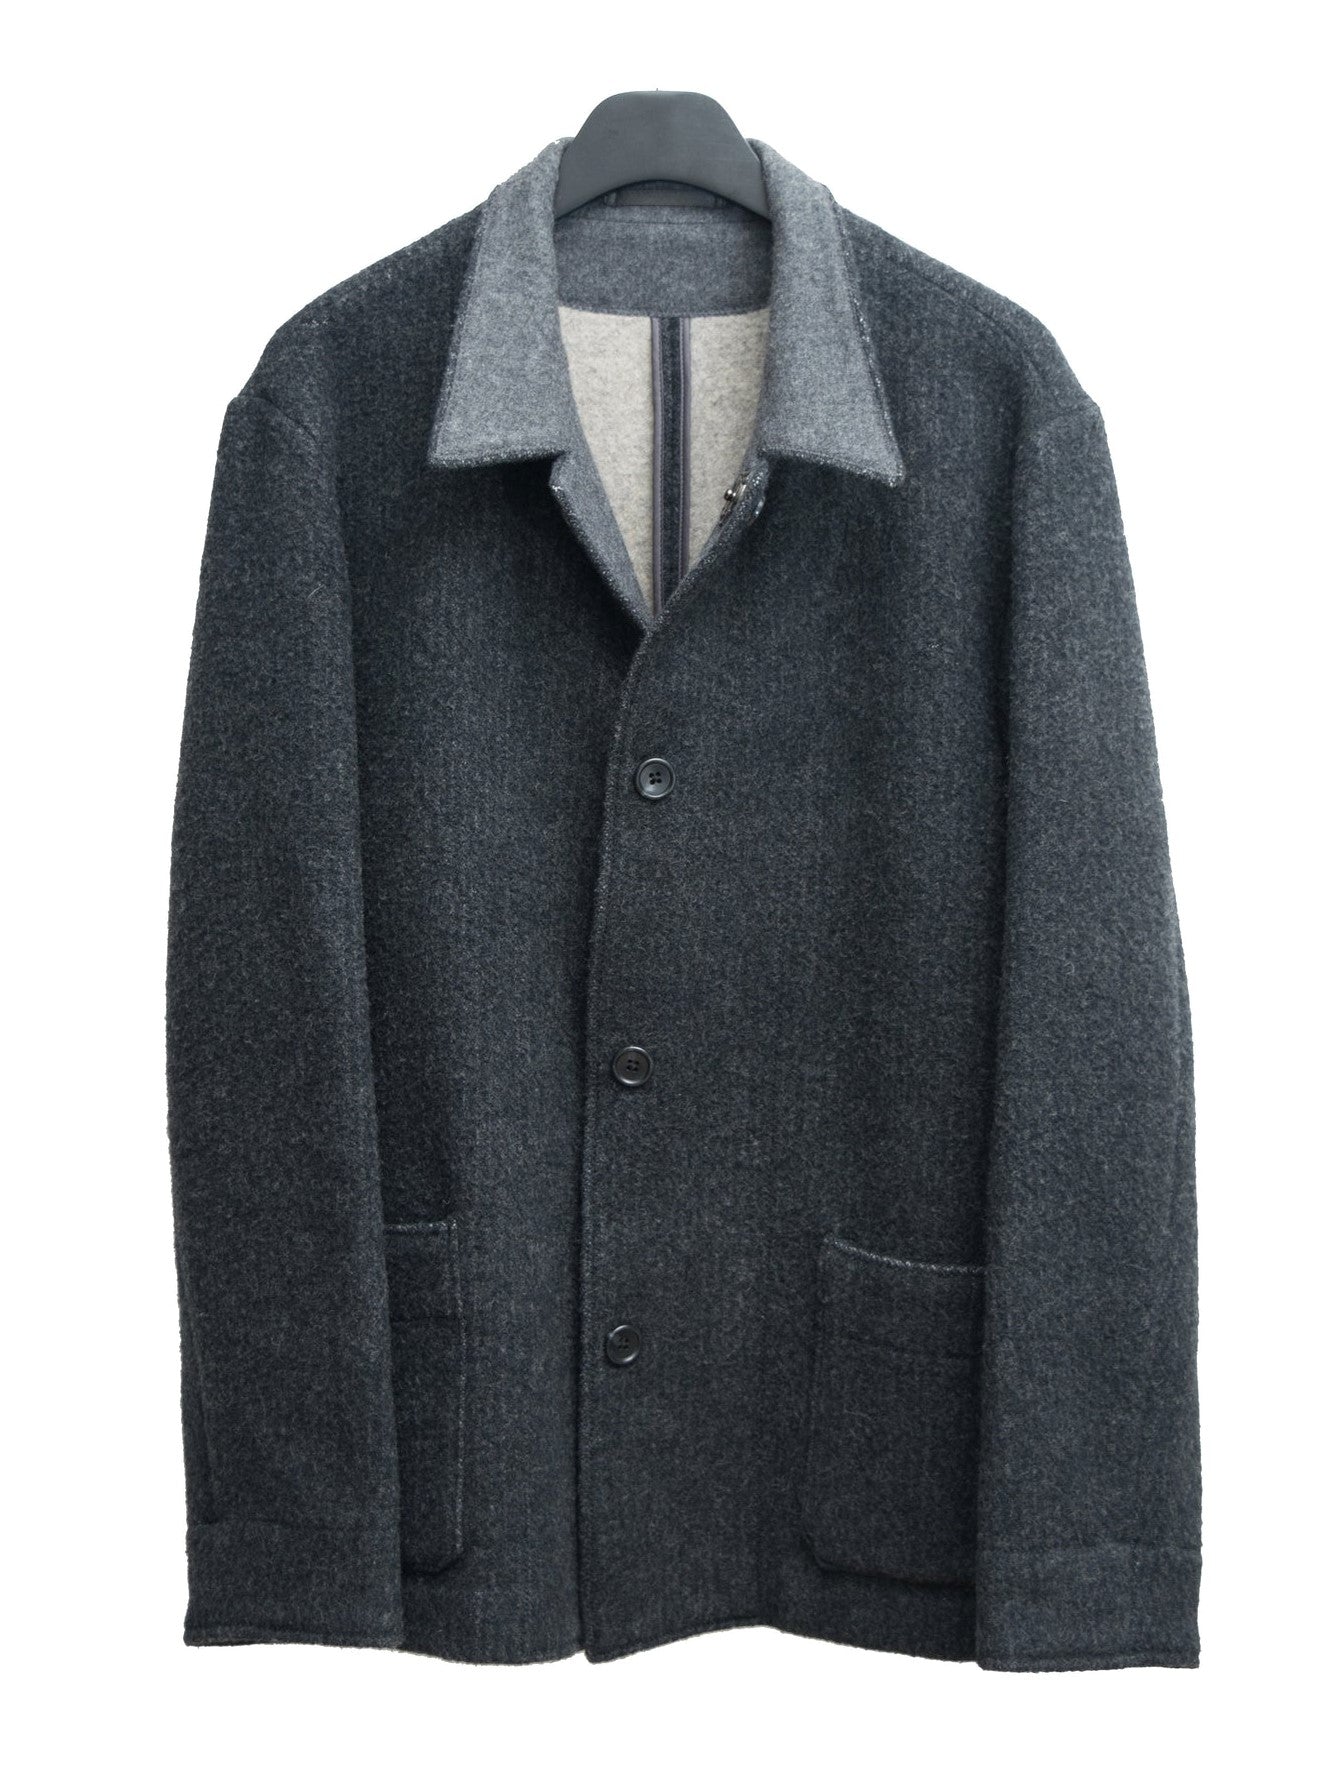 faux front chore jacket charcoal ∙ wool nylon ∙ large